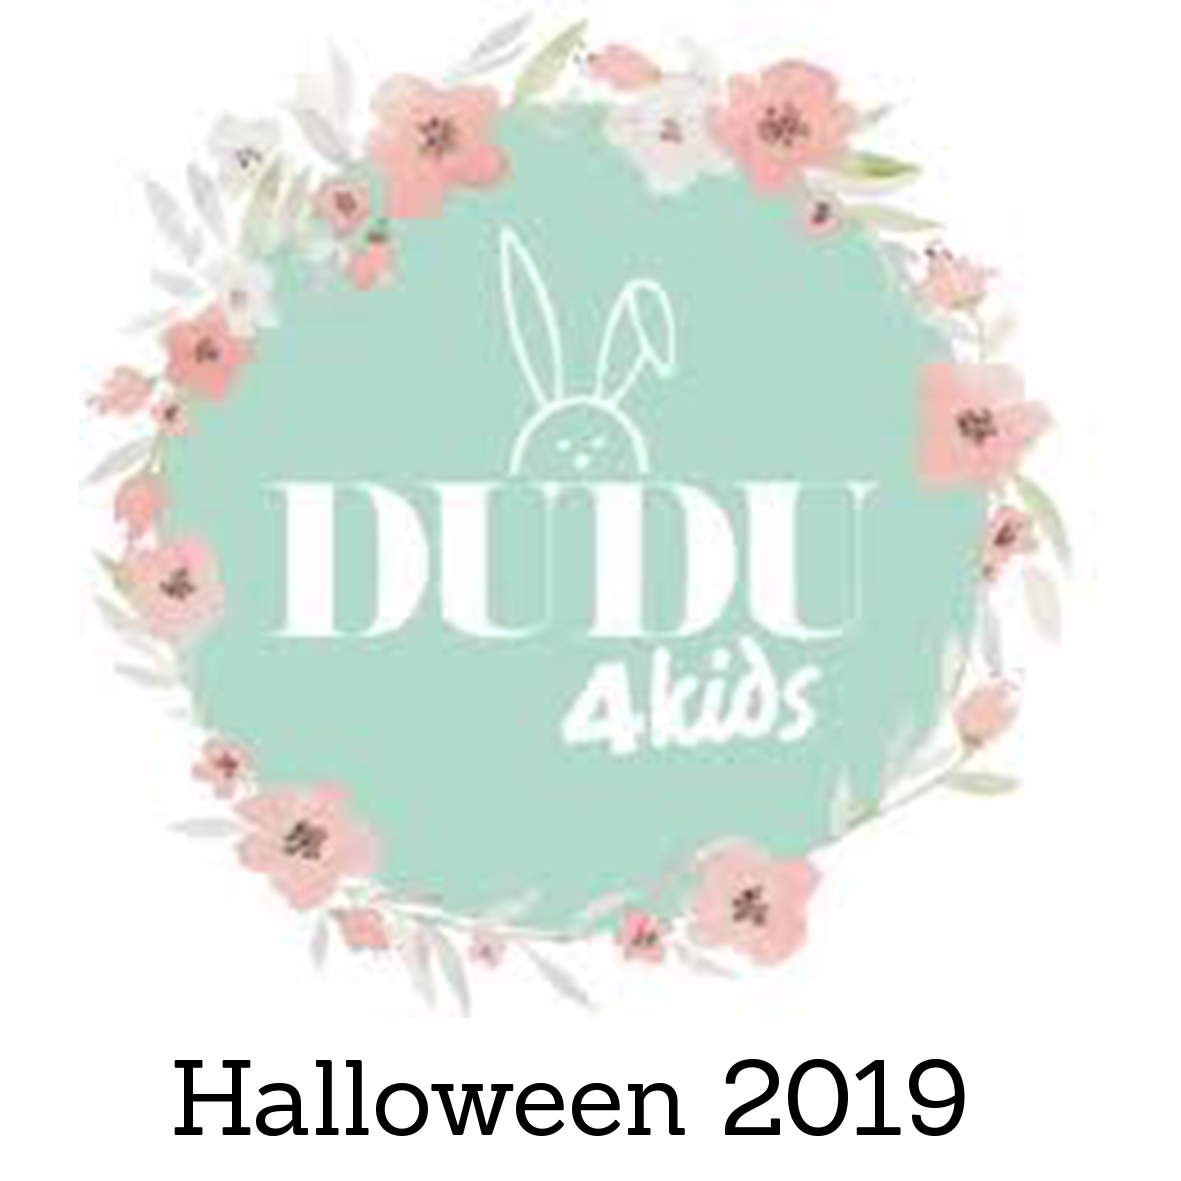 Dudu4Kids Halloween 2019